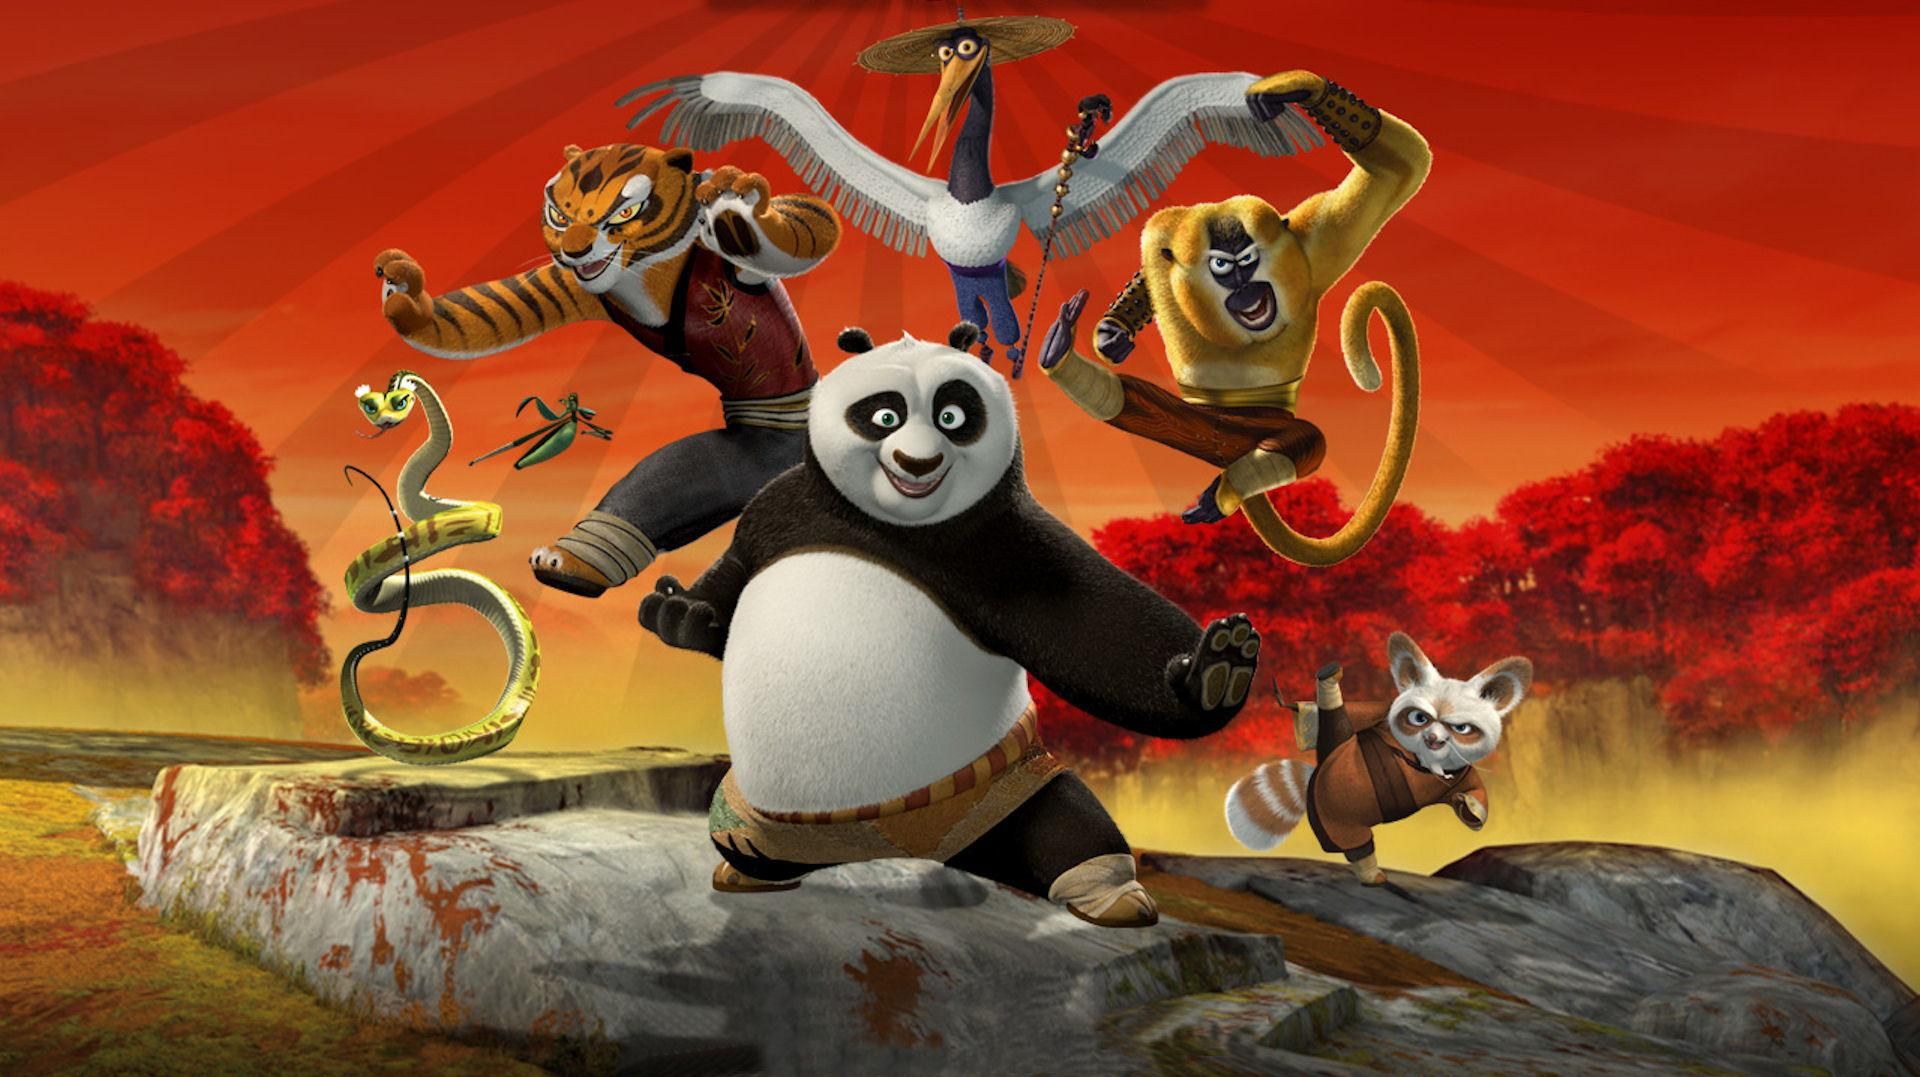 Story Details Revealed for &#039;Kung Fu Panda 3&#039;